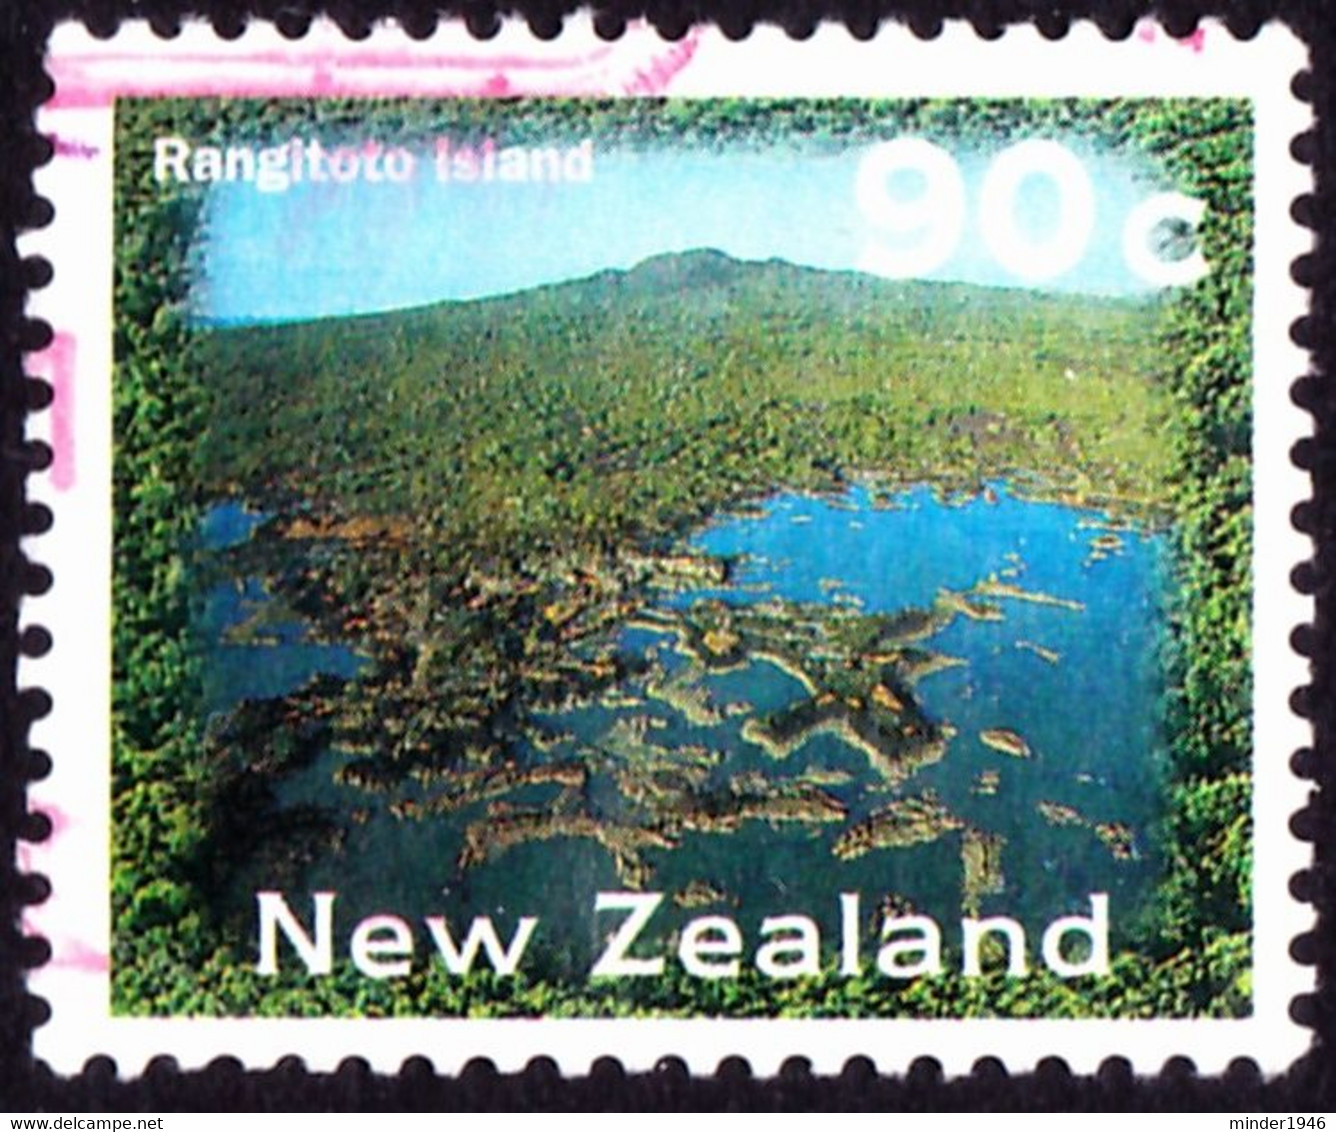 NEW ZEALAND 2000 QEII 90c Multicoloured, Scenery-Rangitoto Island SG1934 FU - Gebraucht